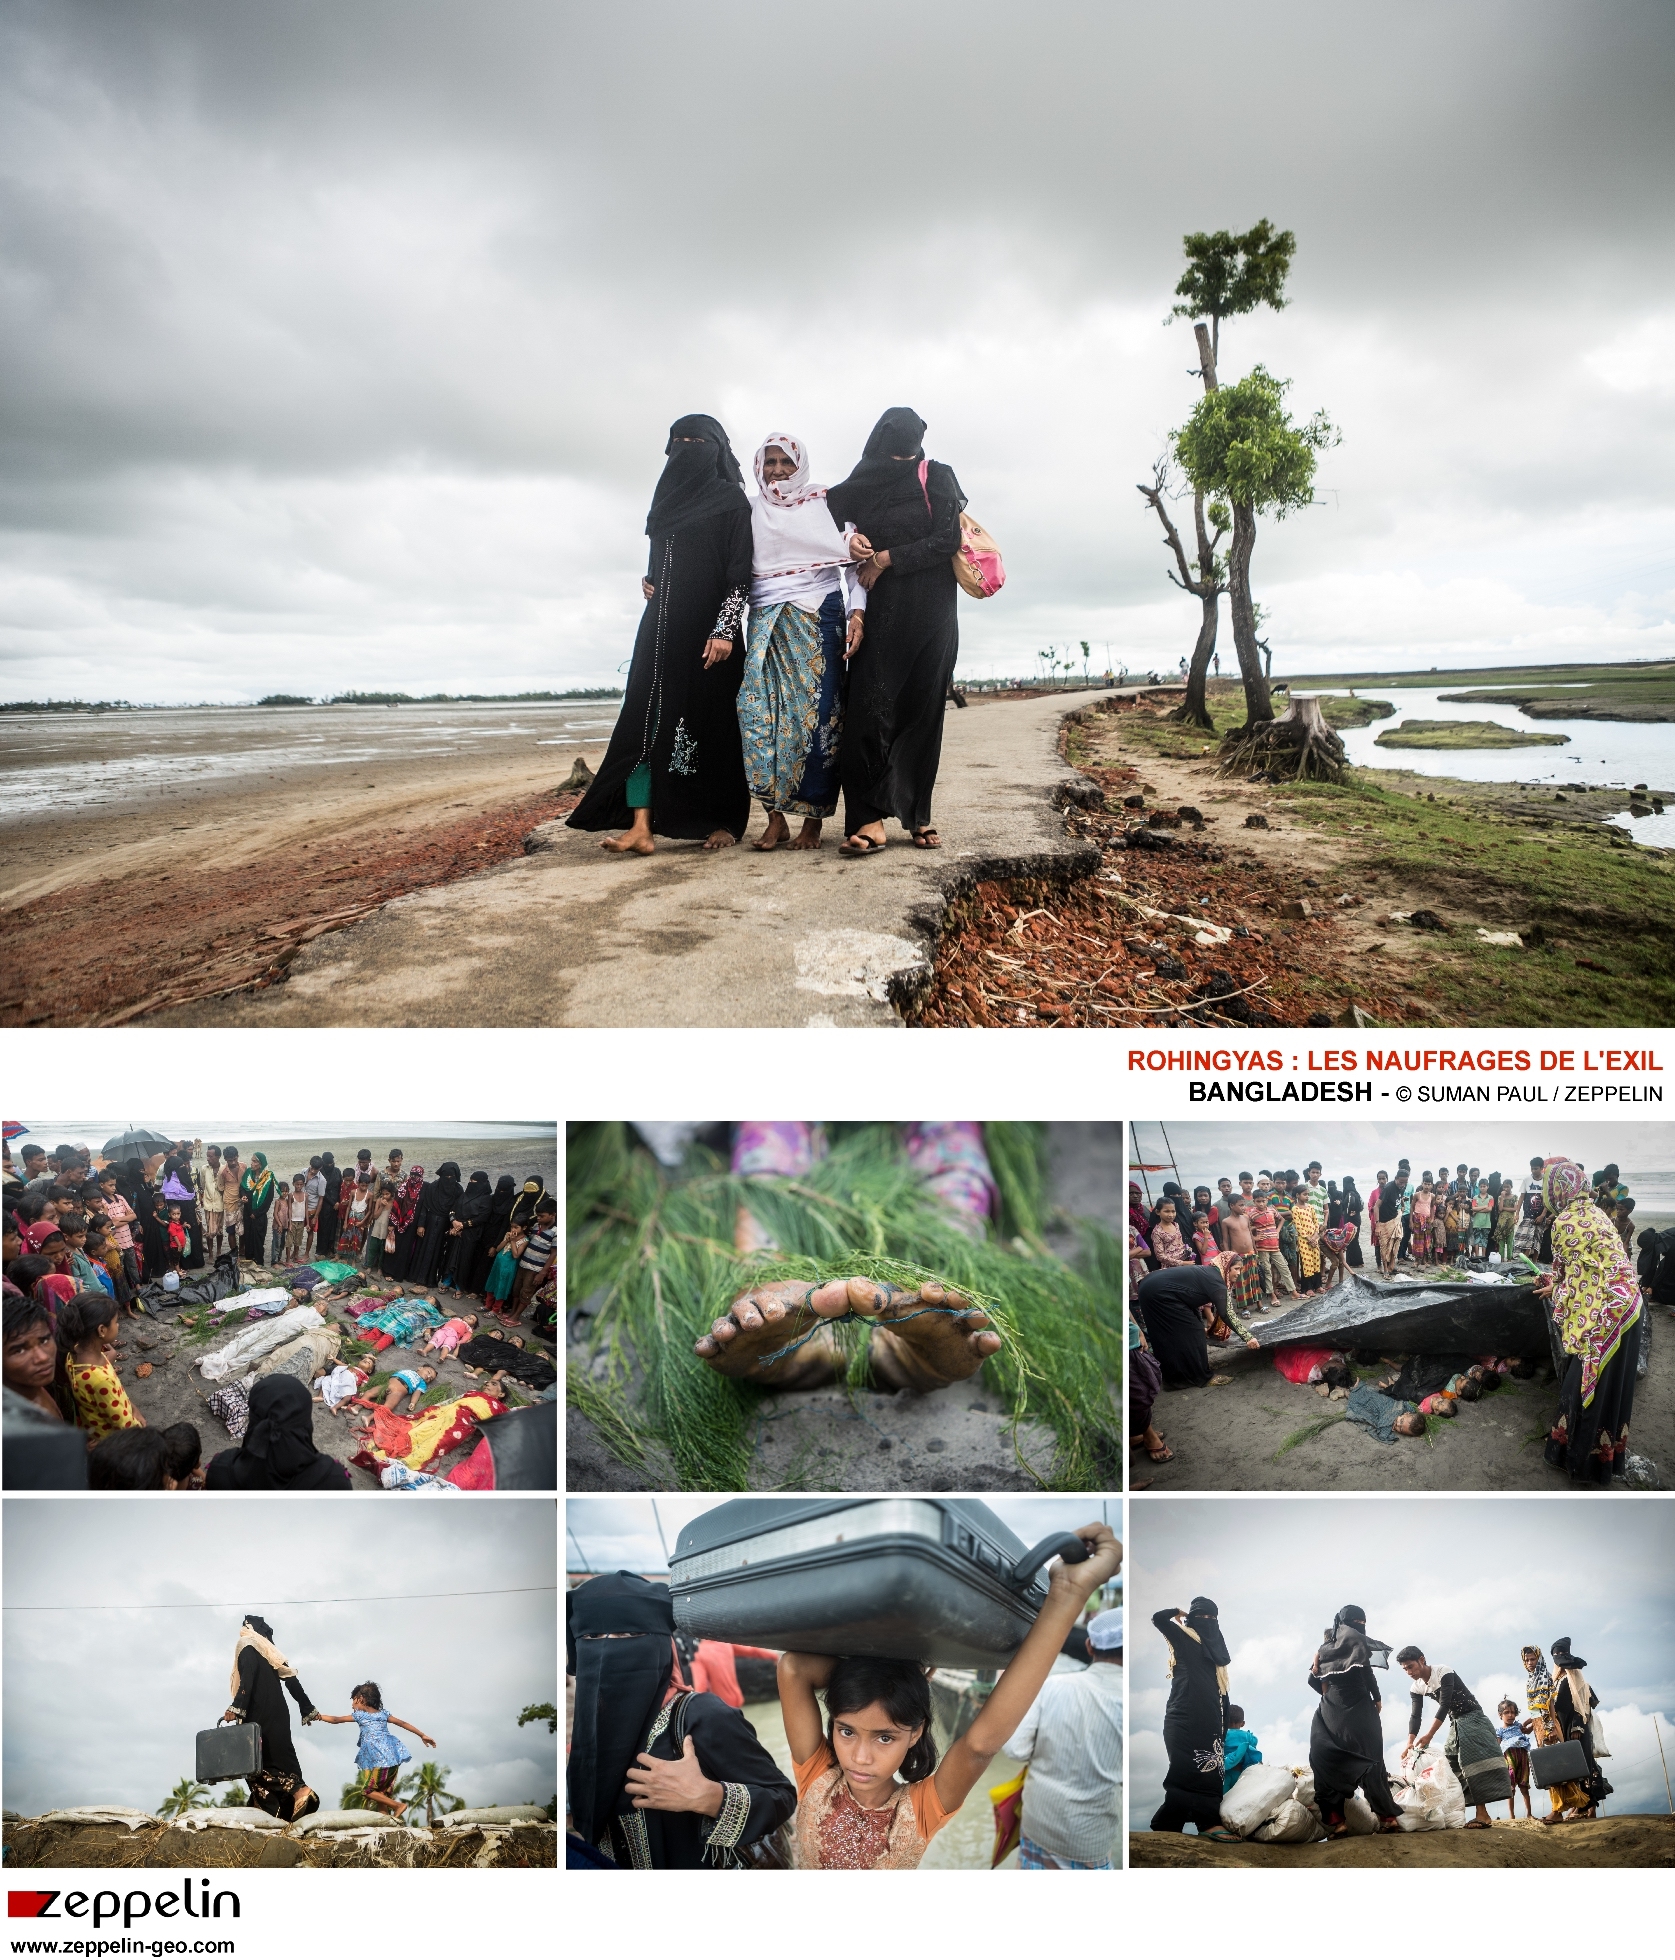 reportage,agence,presse,zeppelin,bangladesh,birmanie,rohingyas,photographe,suman paul,défi,prix nobel,aung san suu kyi,bouddhisme,islam